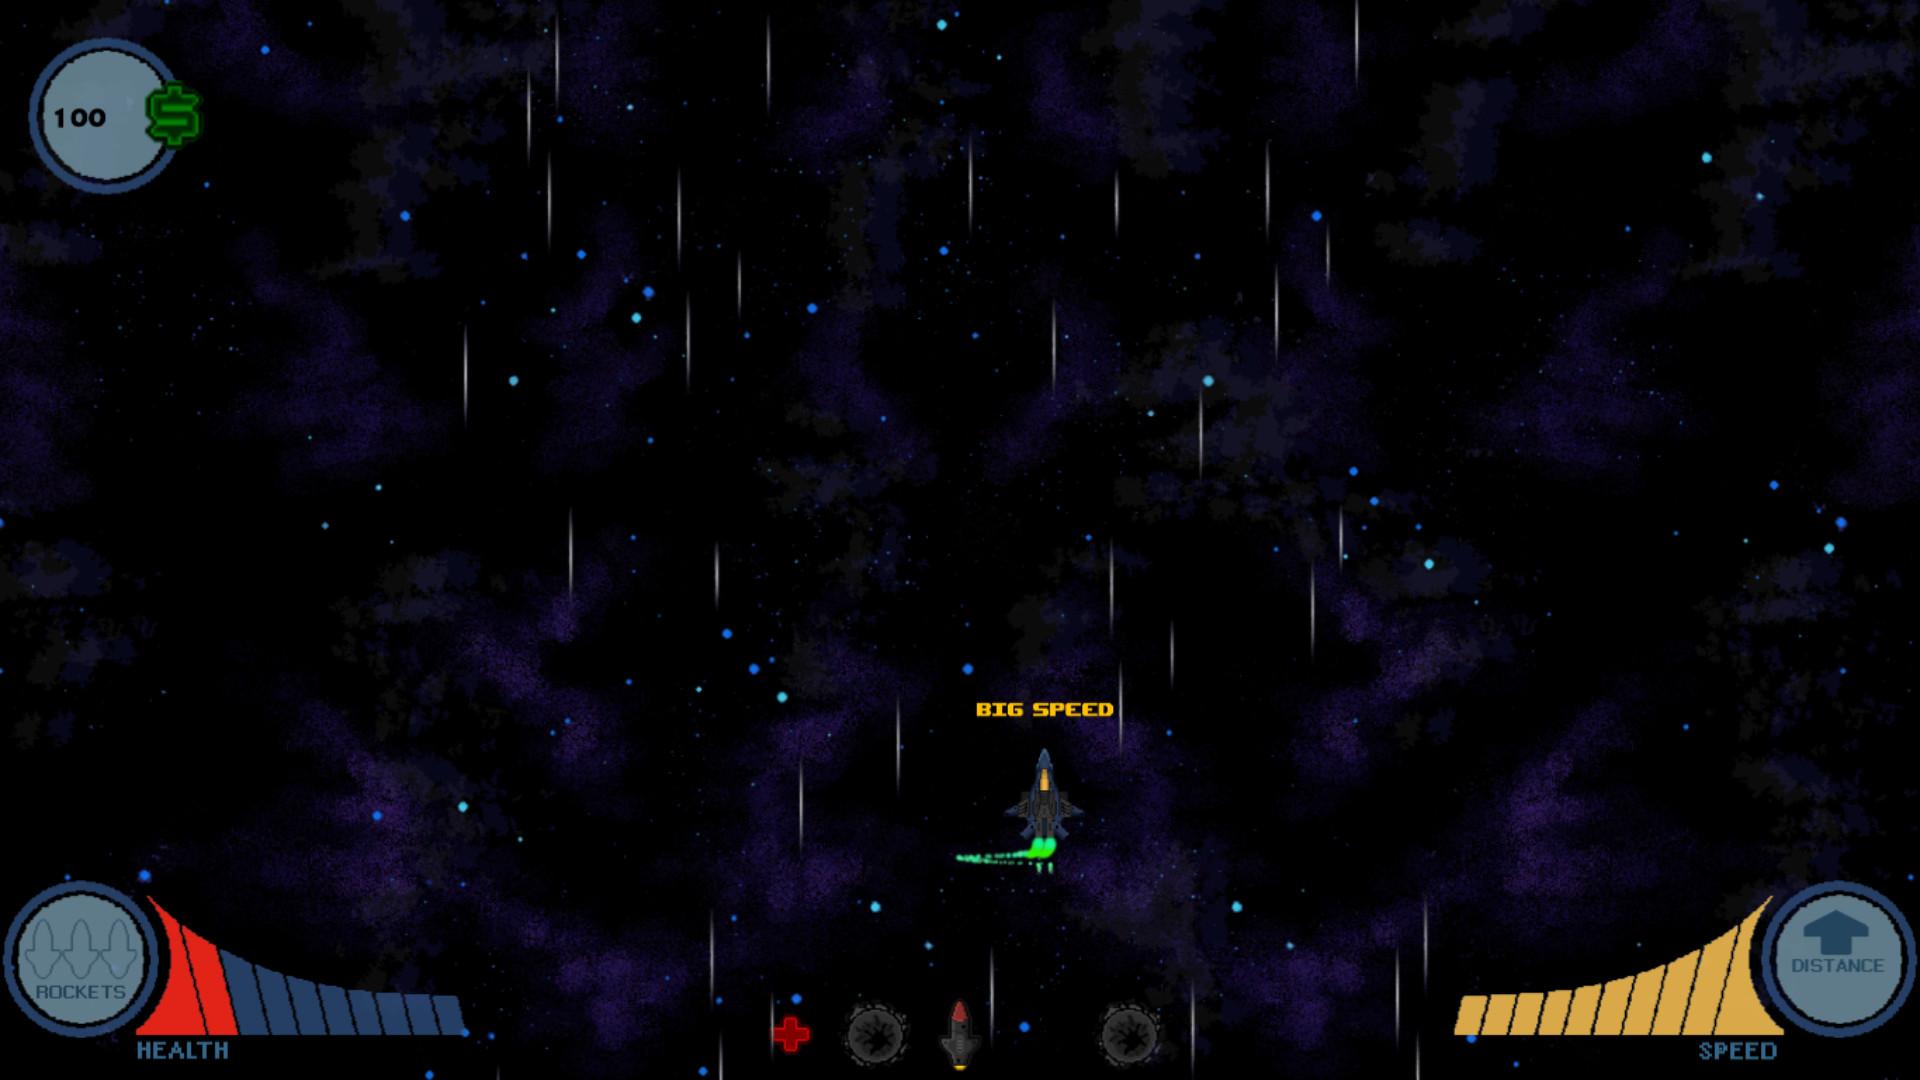 Screenshot №1 from game $1 Ride